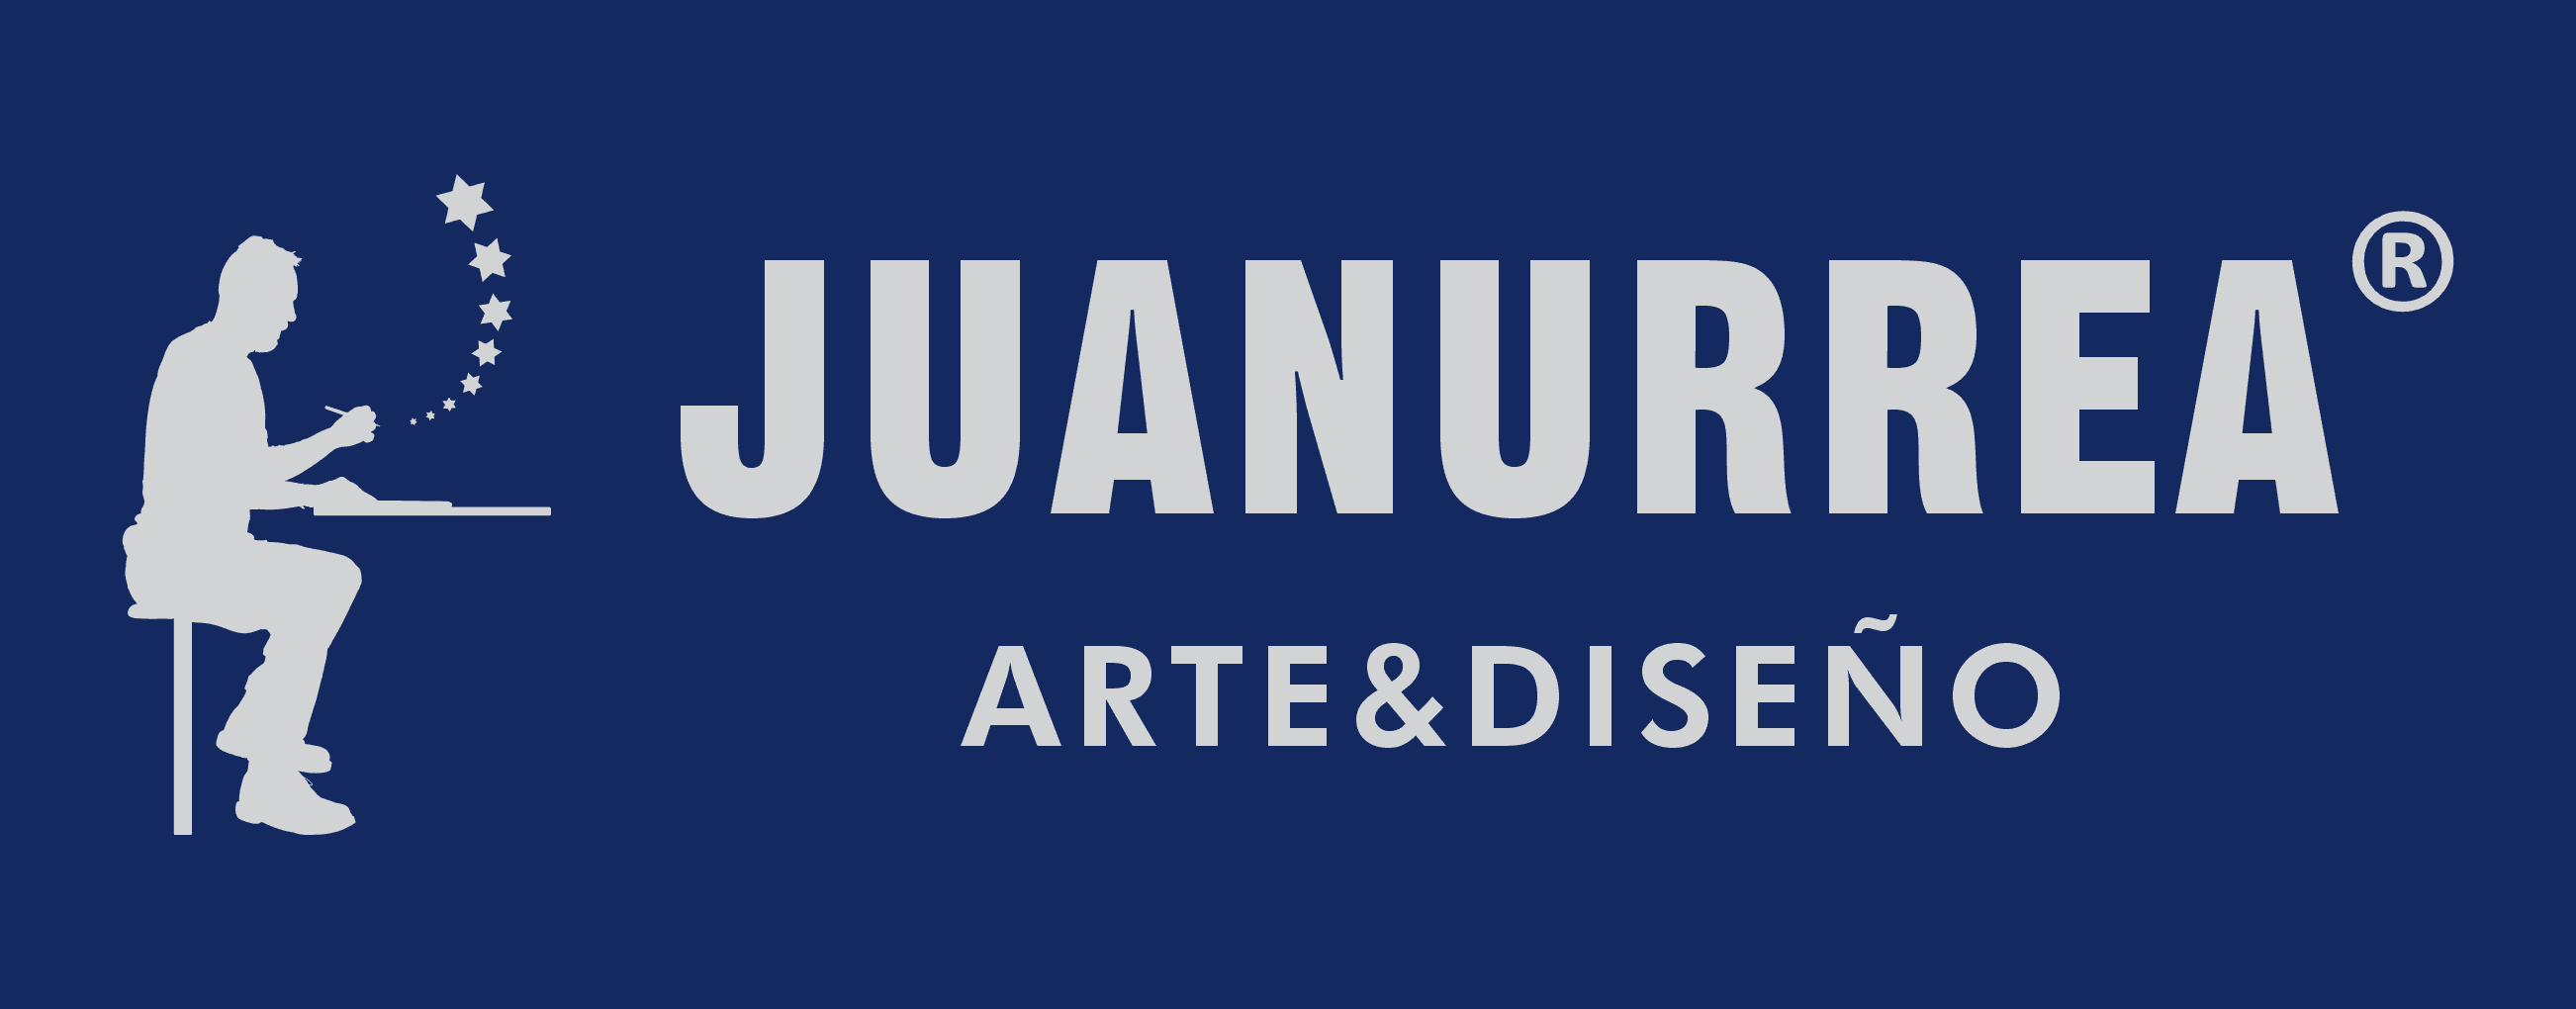 JUANURREA bannière